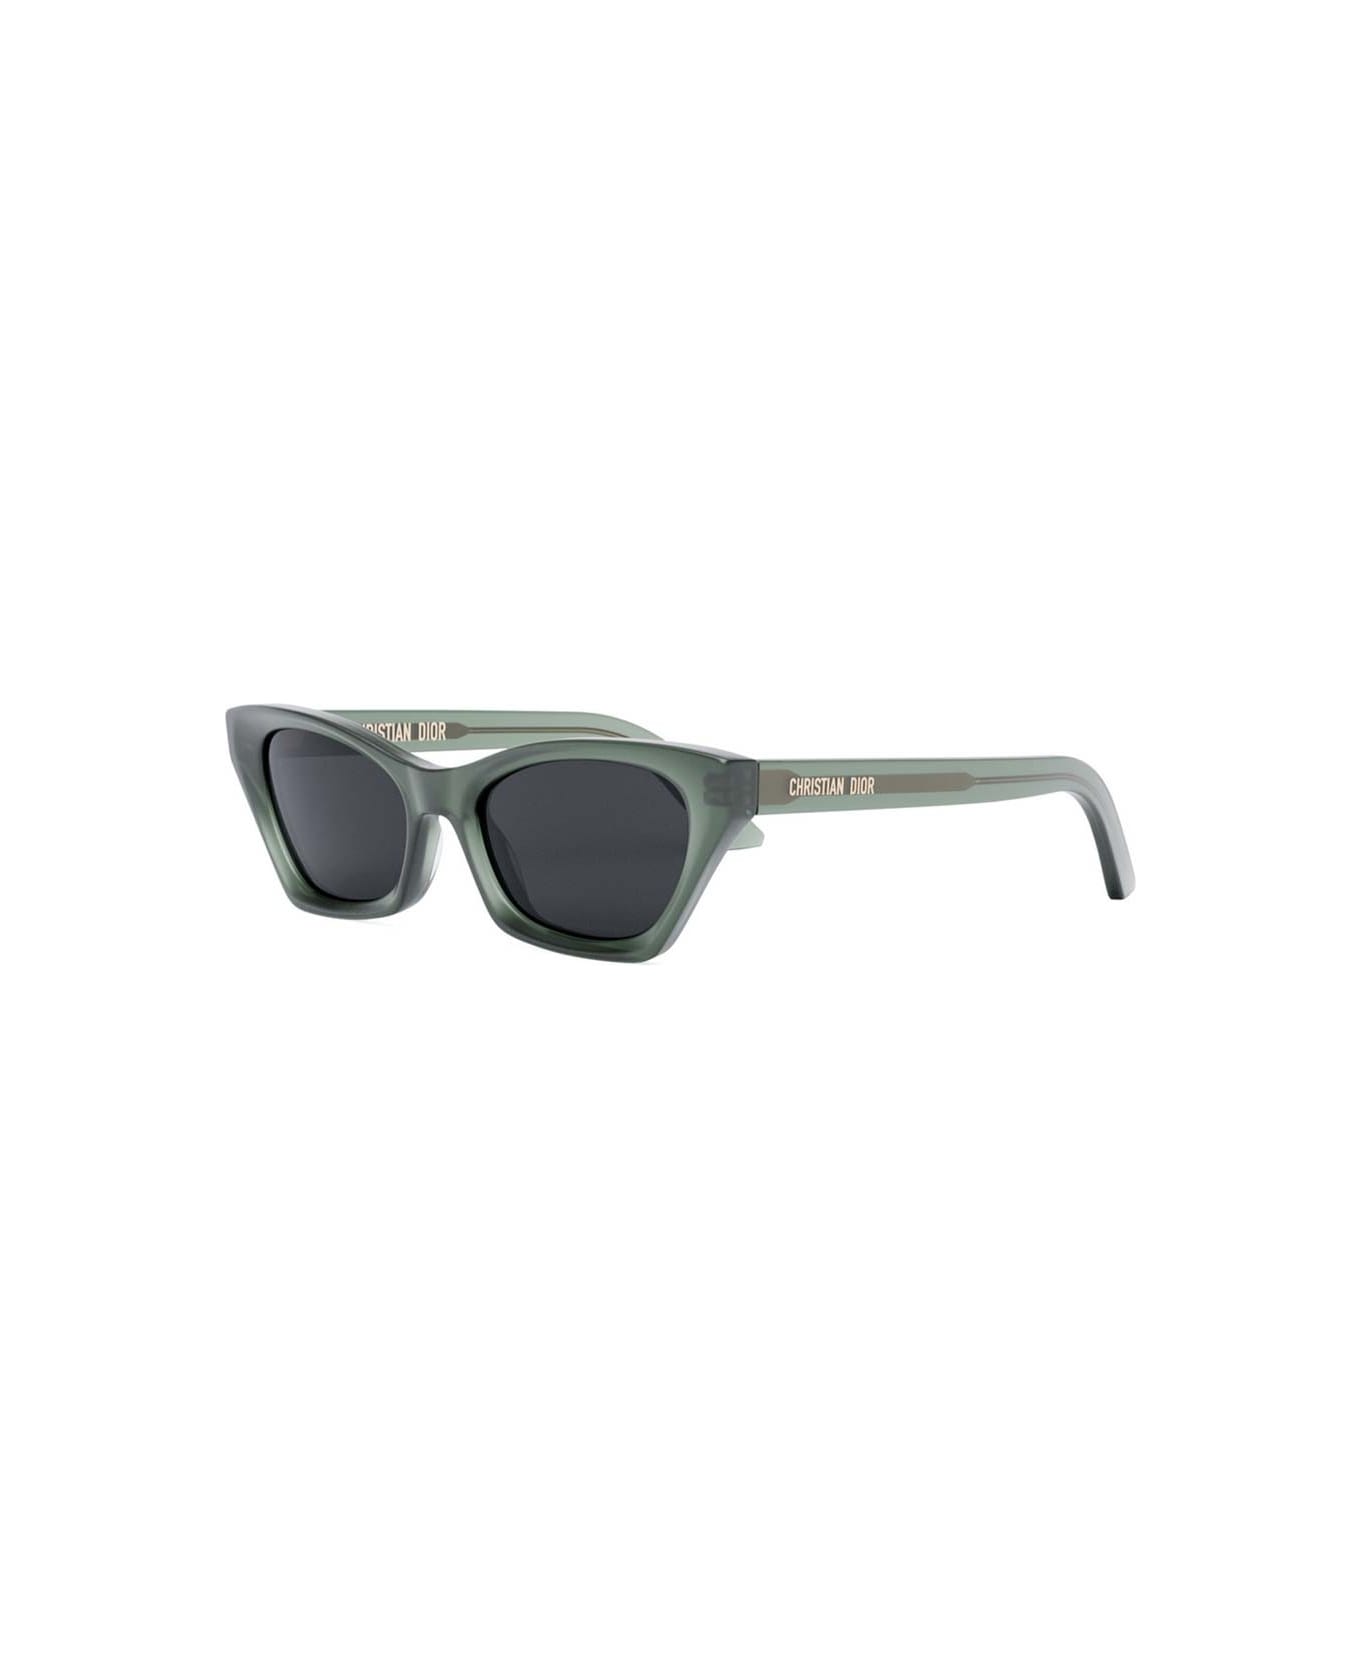 Dior Eyewear Sunglasses - Verde/Grigio